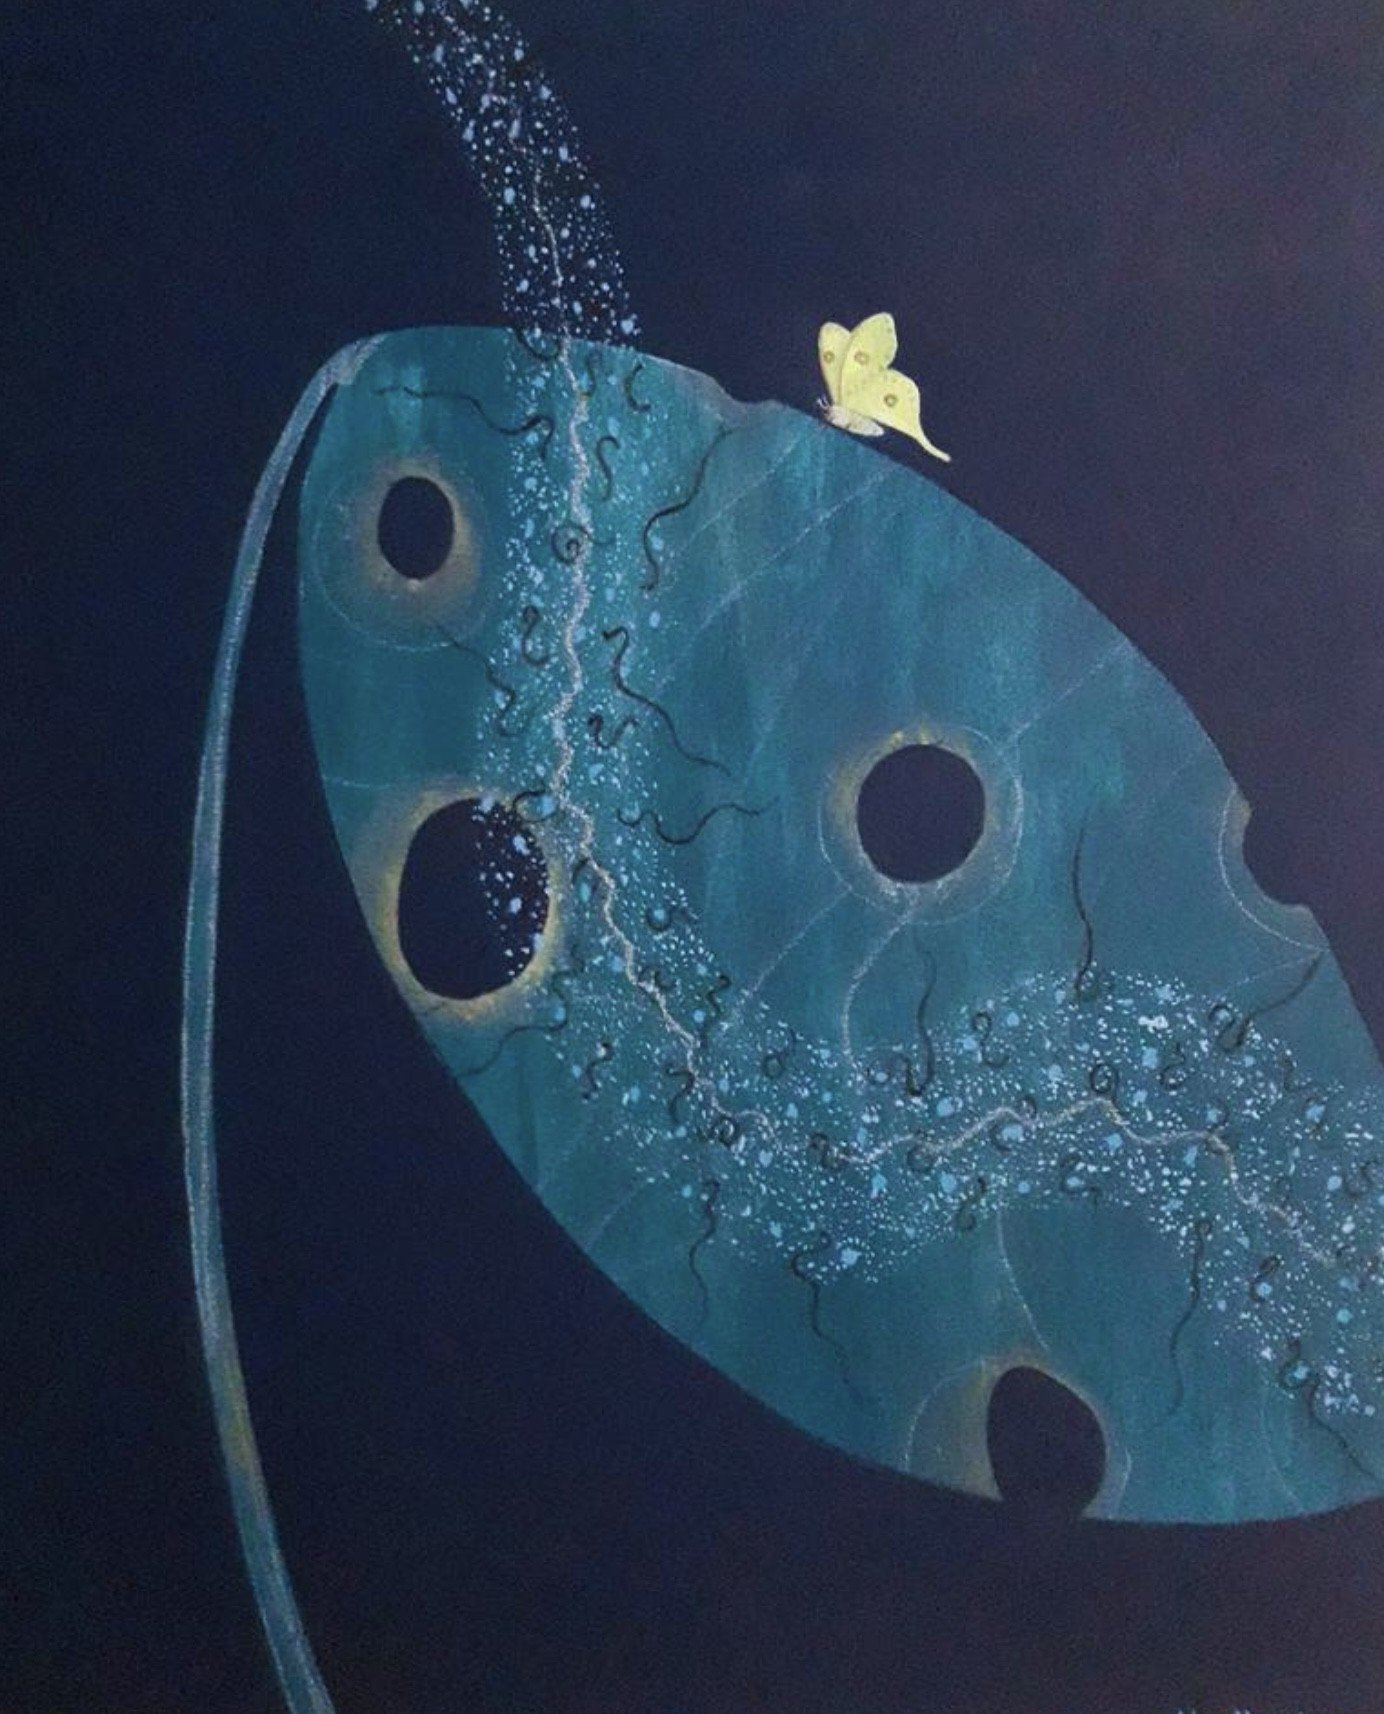 Luna Moth (2021) 50 x 60.6 cm. Oil on Canvas